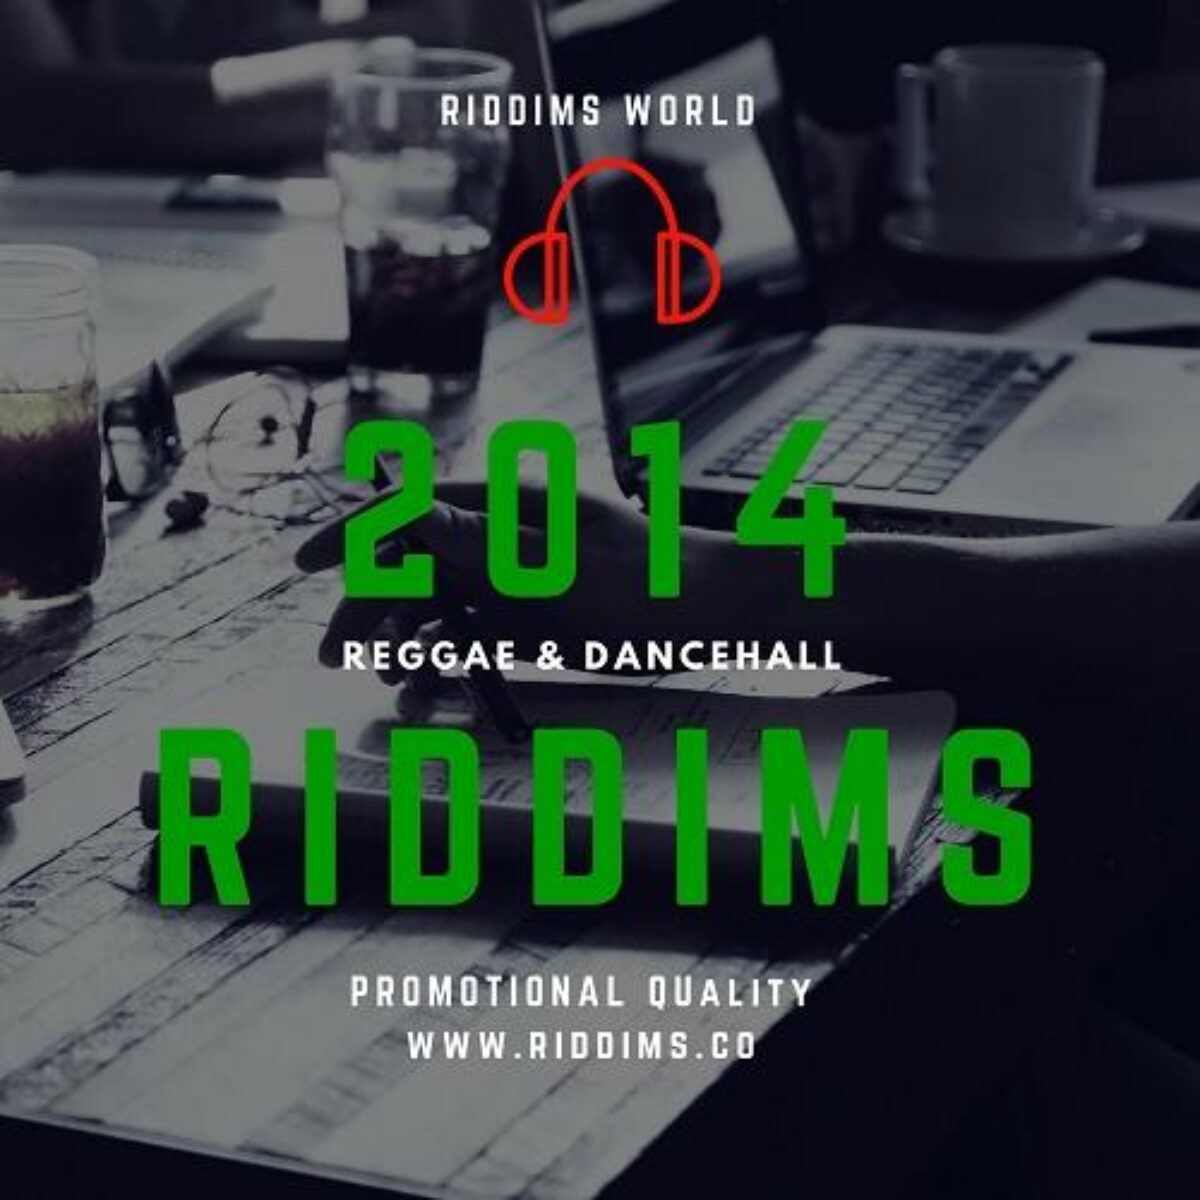 80 reggae riddims list